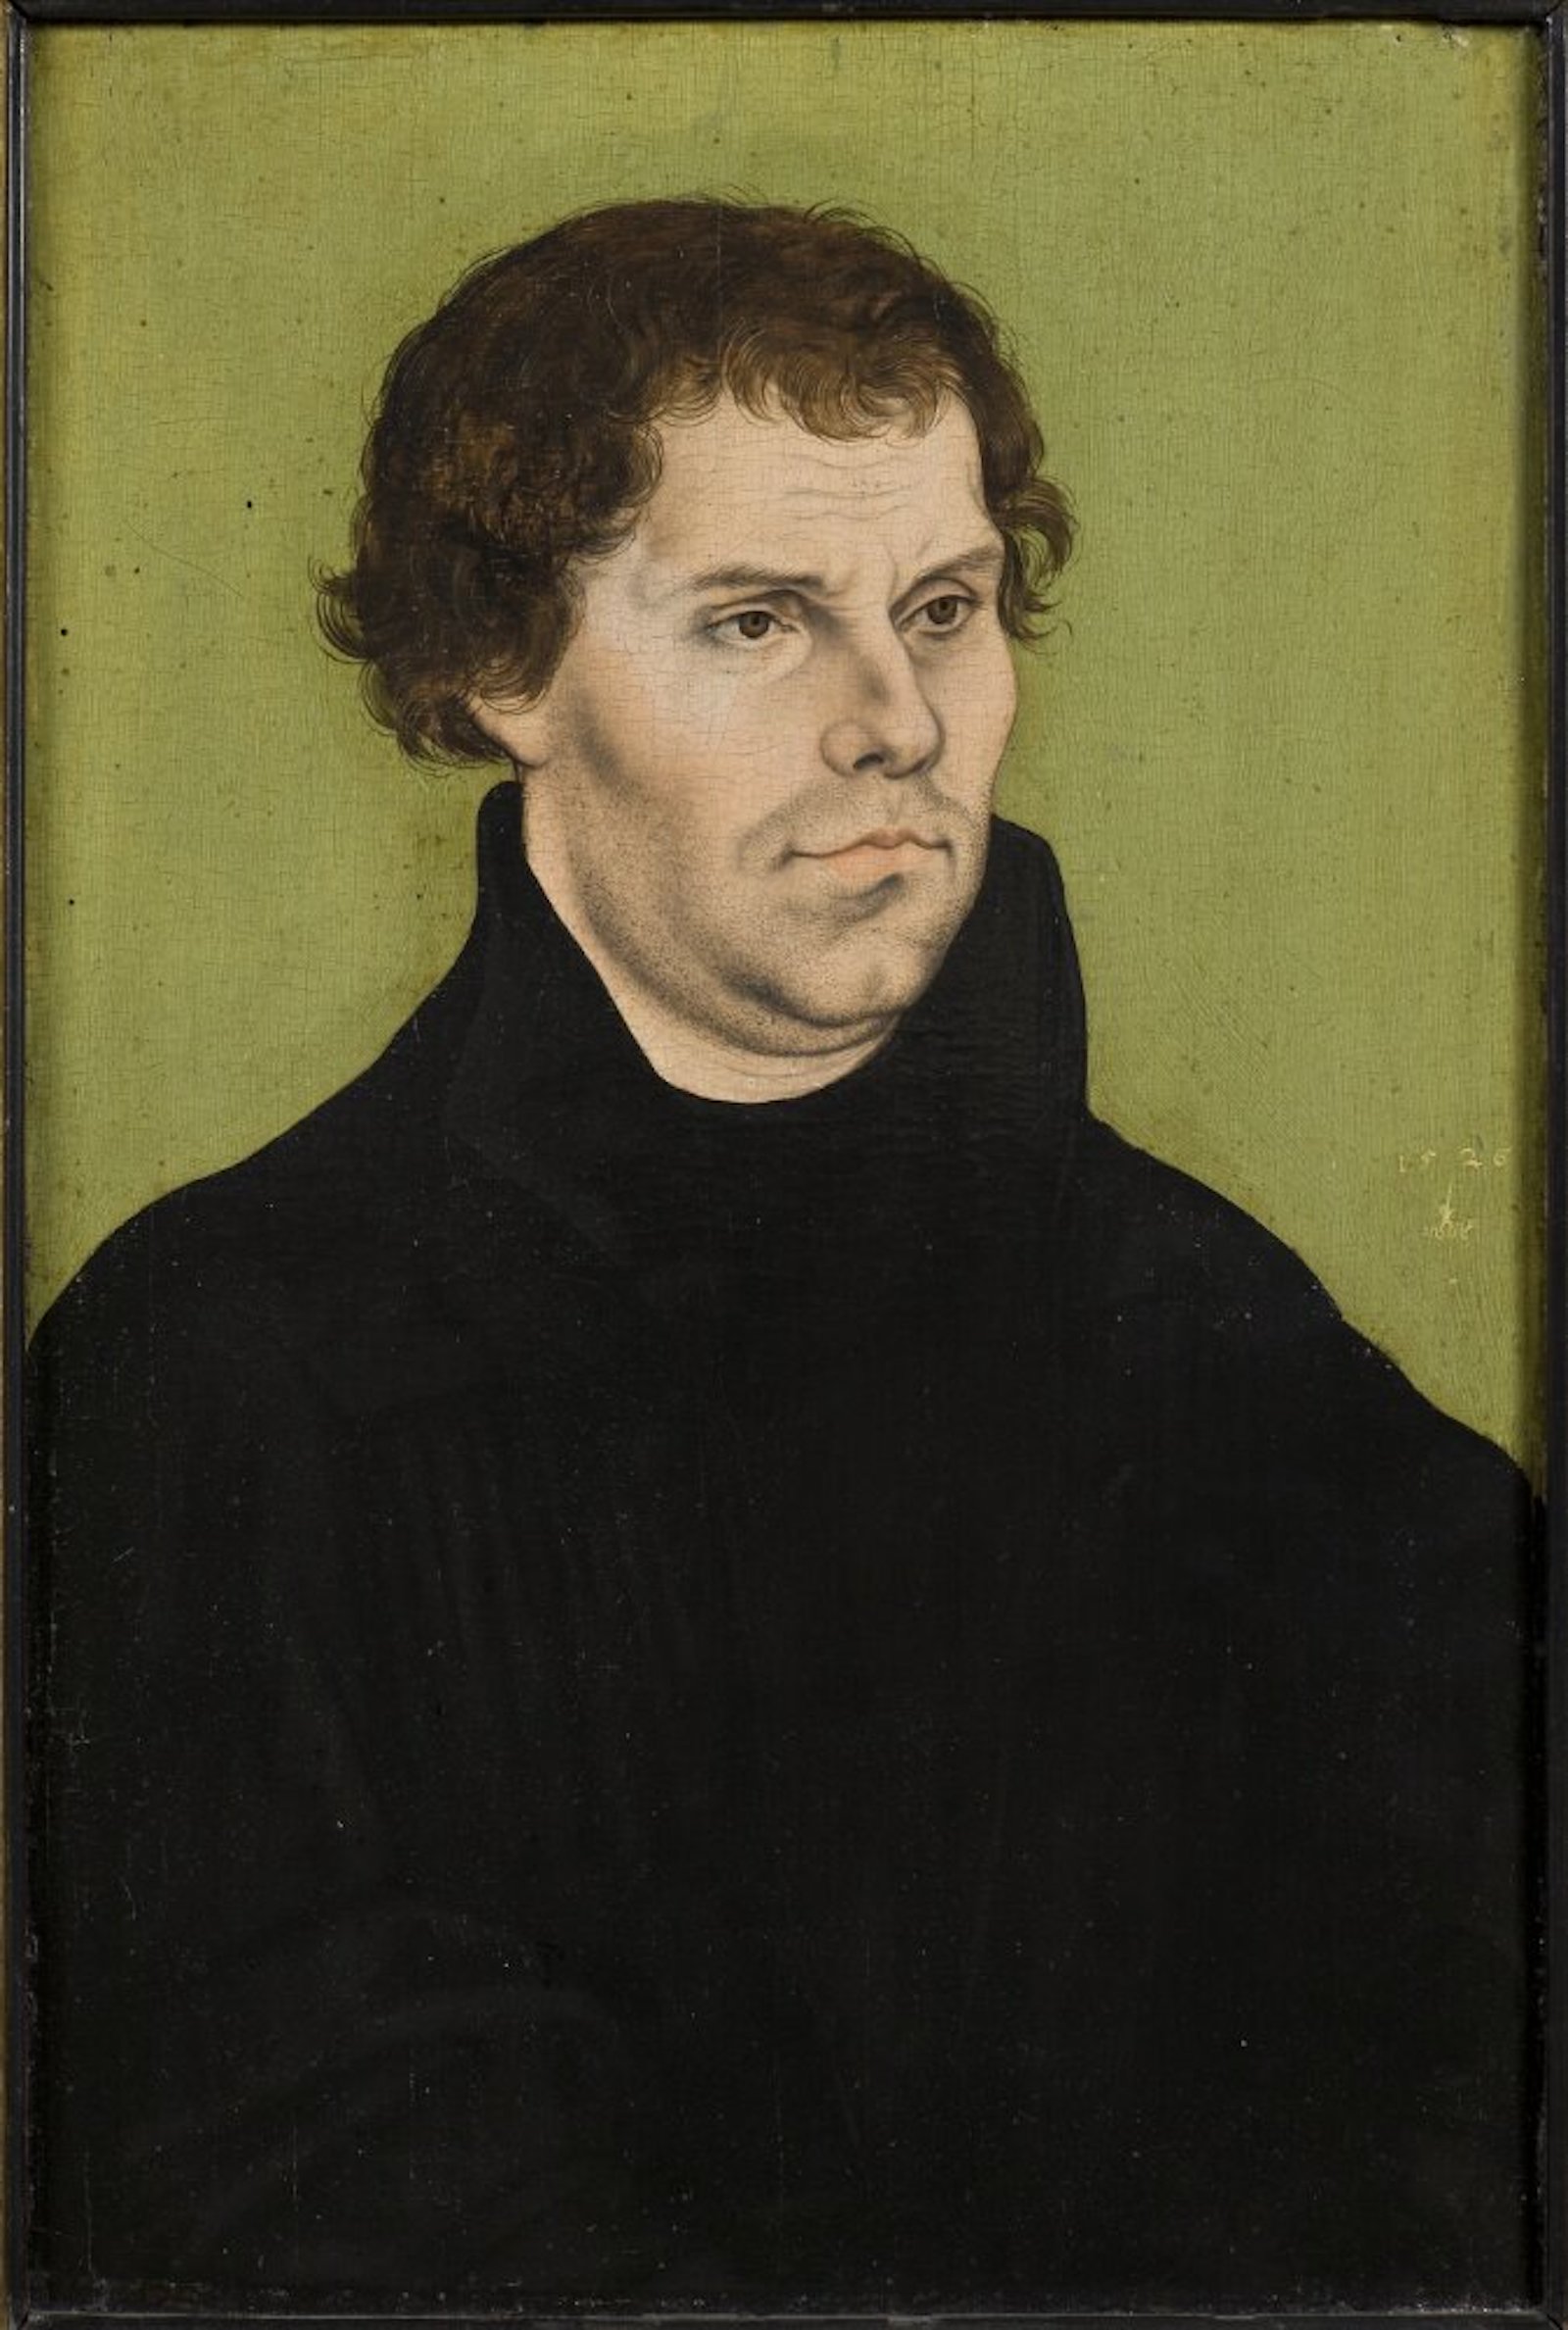 A portrait of Martin Luther by Lucas Cranach, c. 1526. Nationalmuseet Sweden. Public Domain.